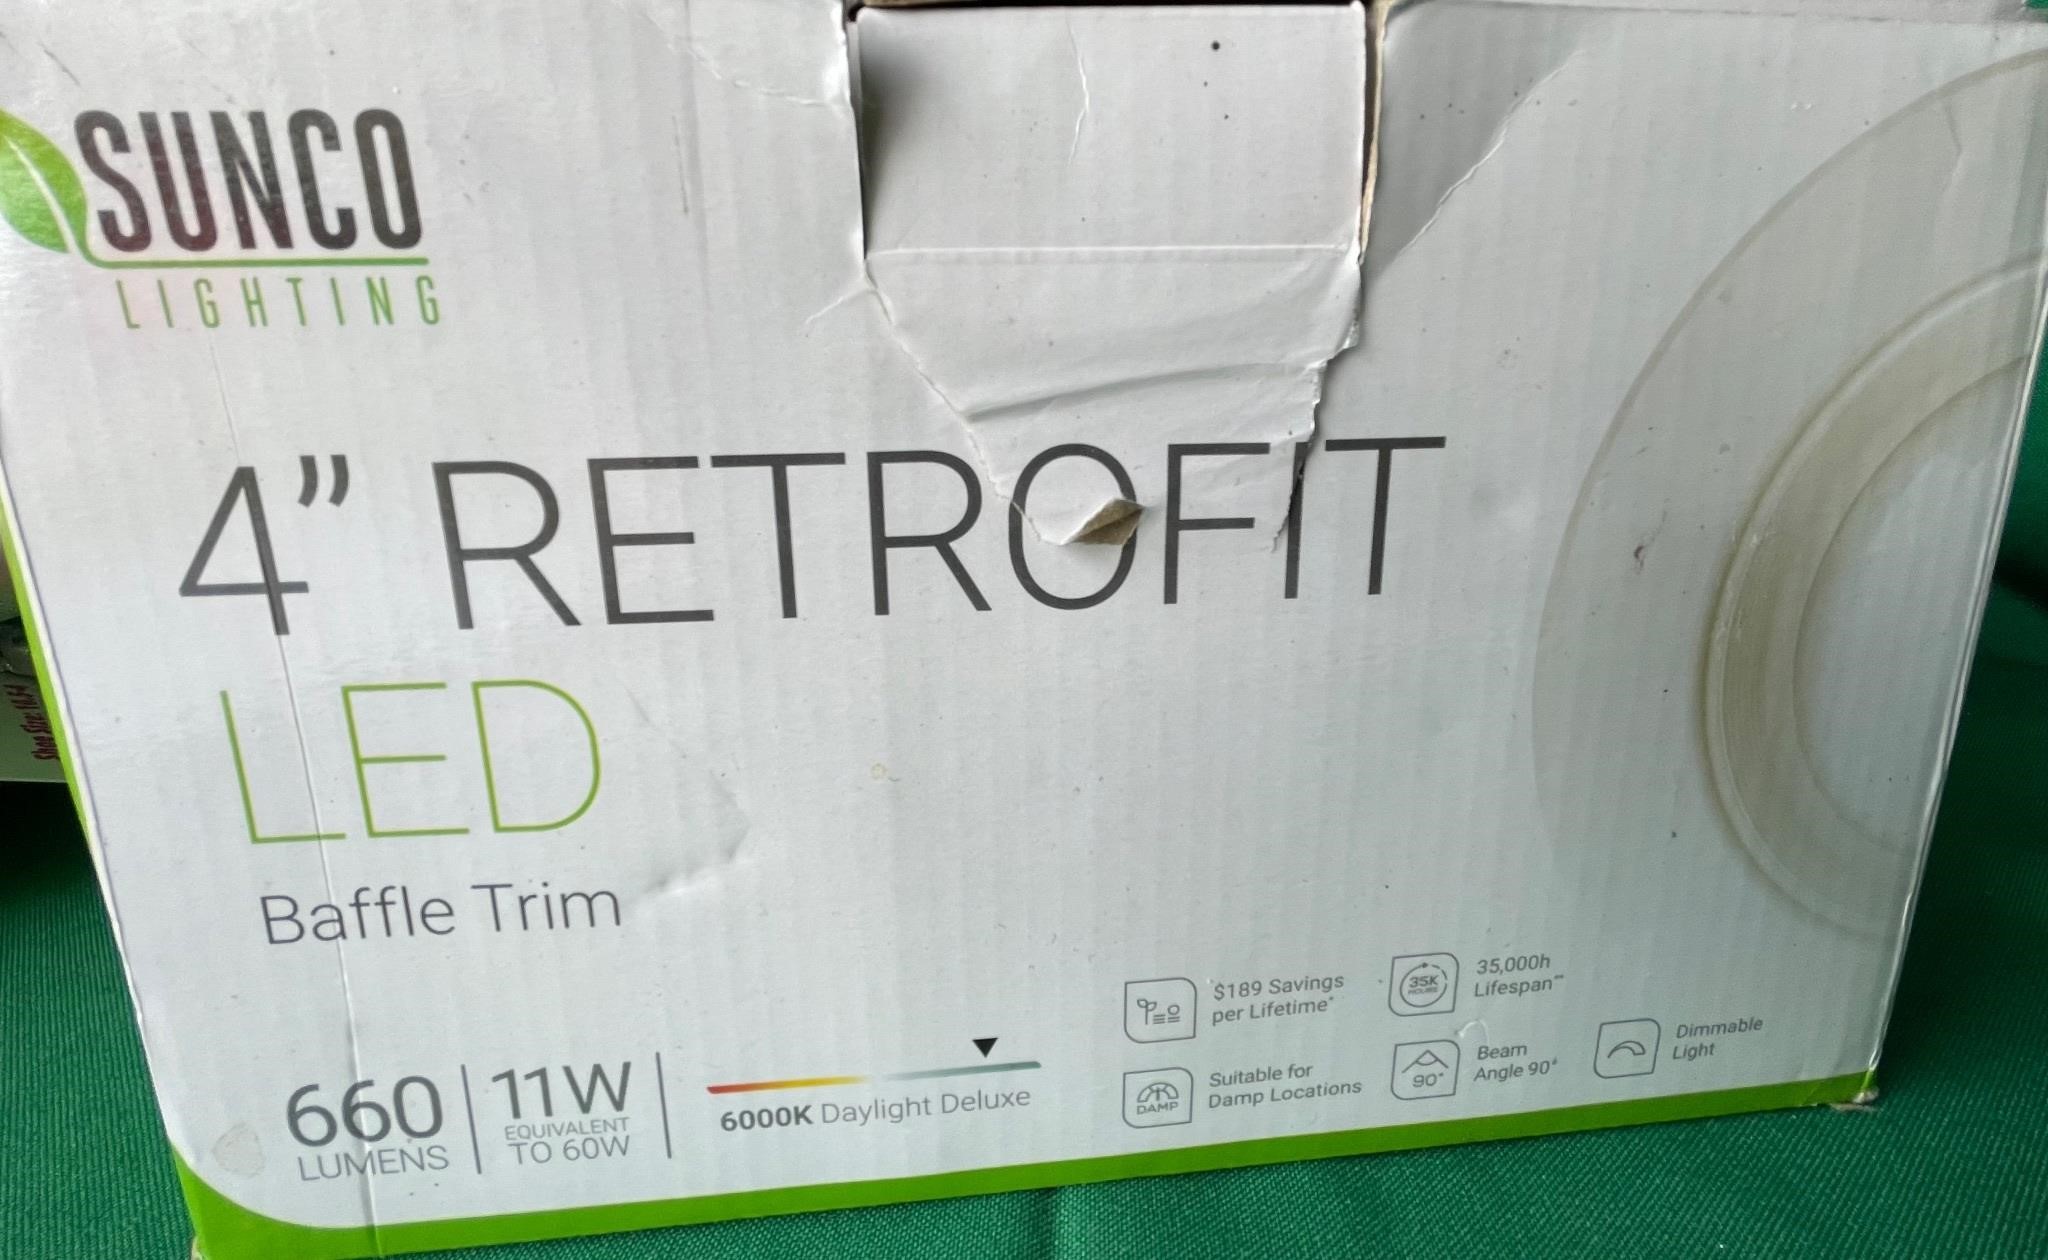 New 4” Retrofit LED Light Baffle Trim